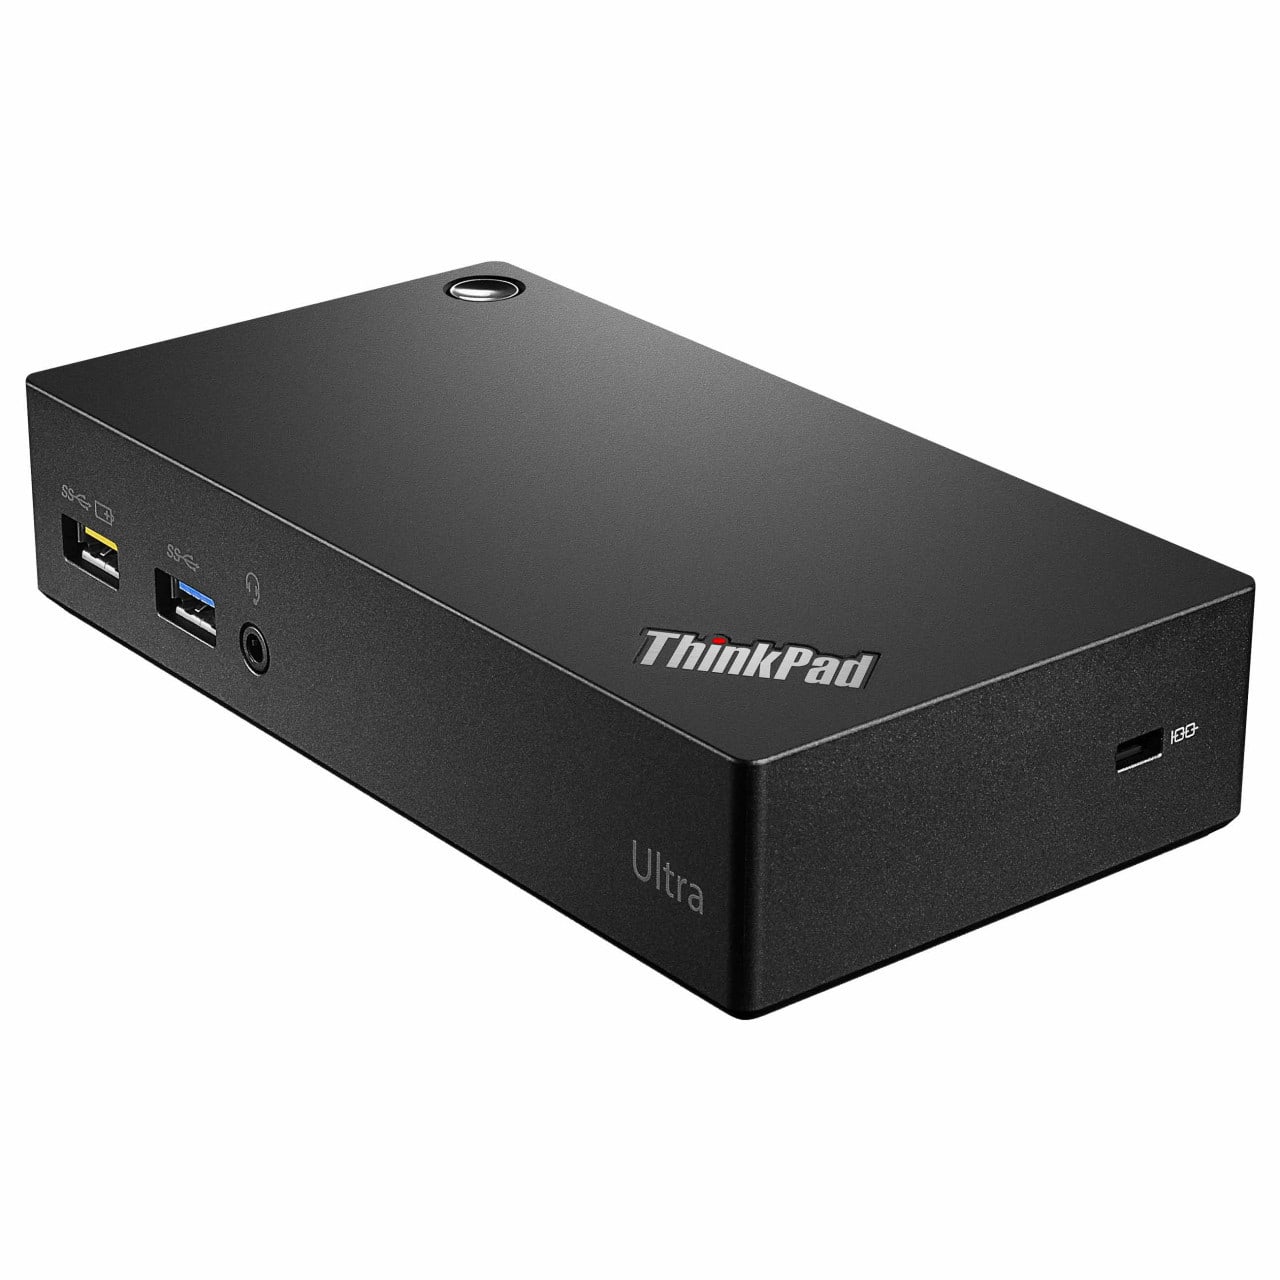 Lenovo ThinkPad USB 3.0 UltraDock